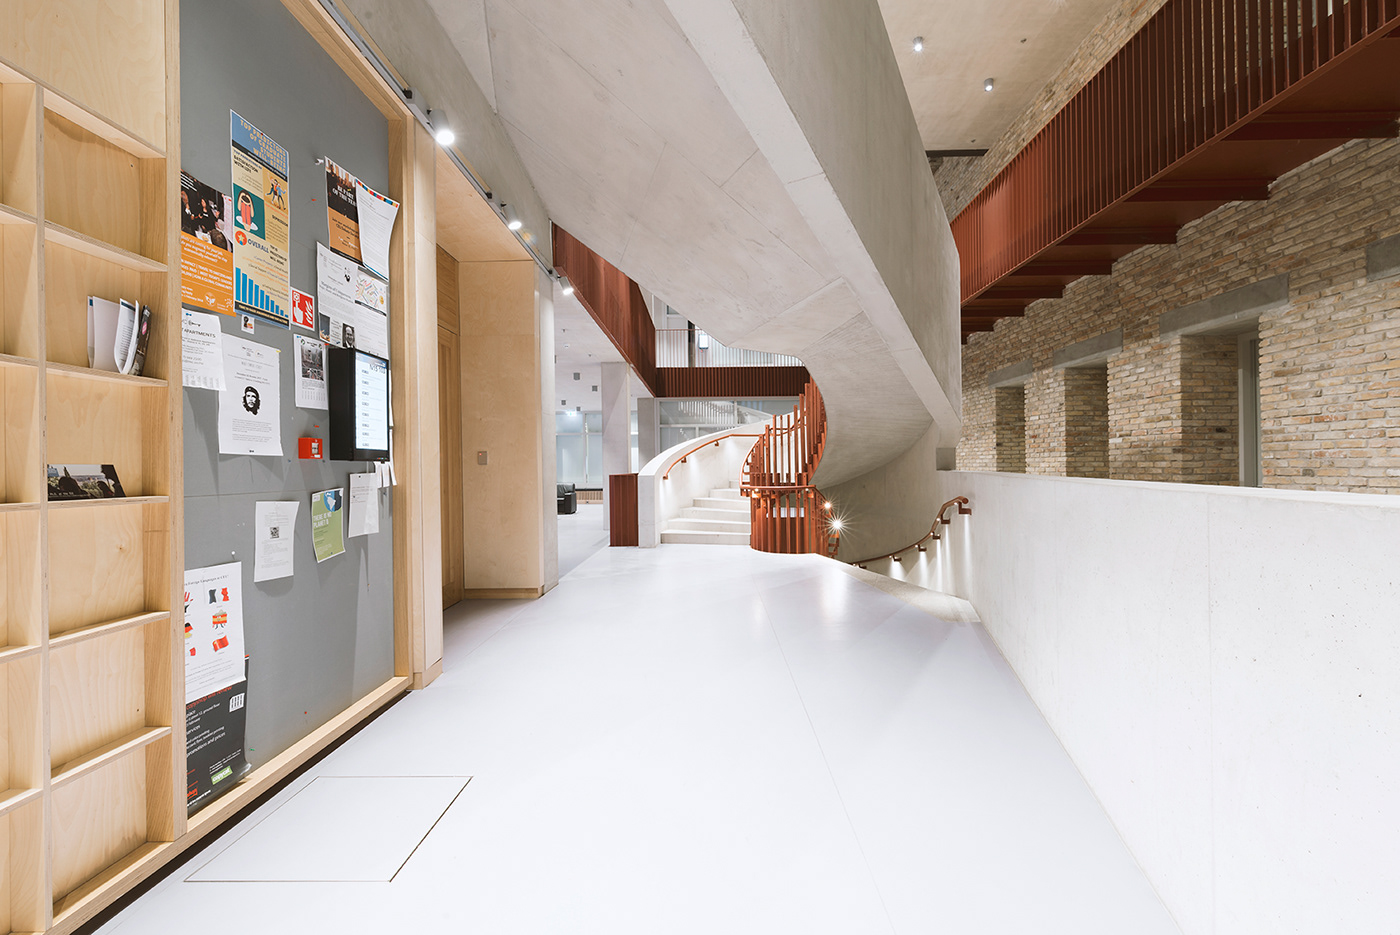 architecture interiors budapest copenhagen seoul beijing museums